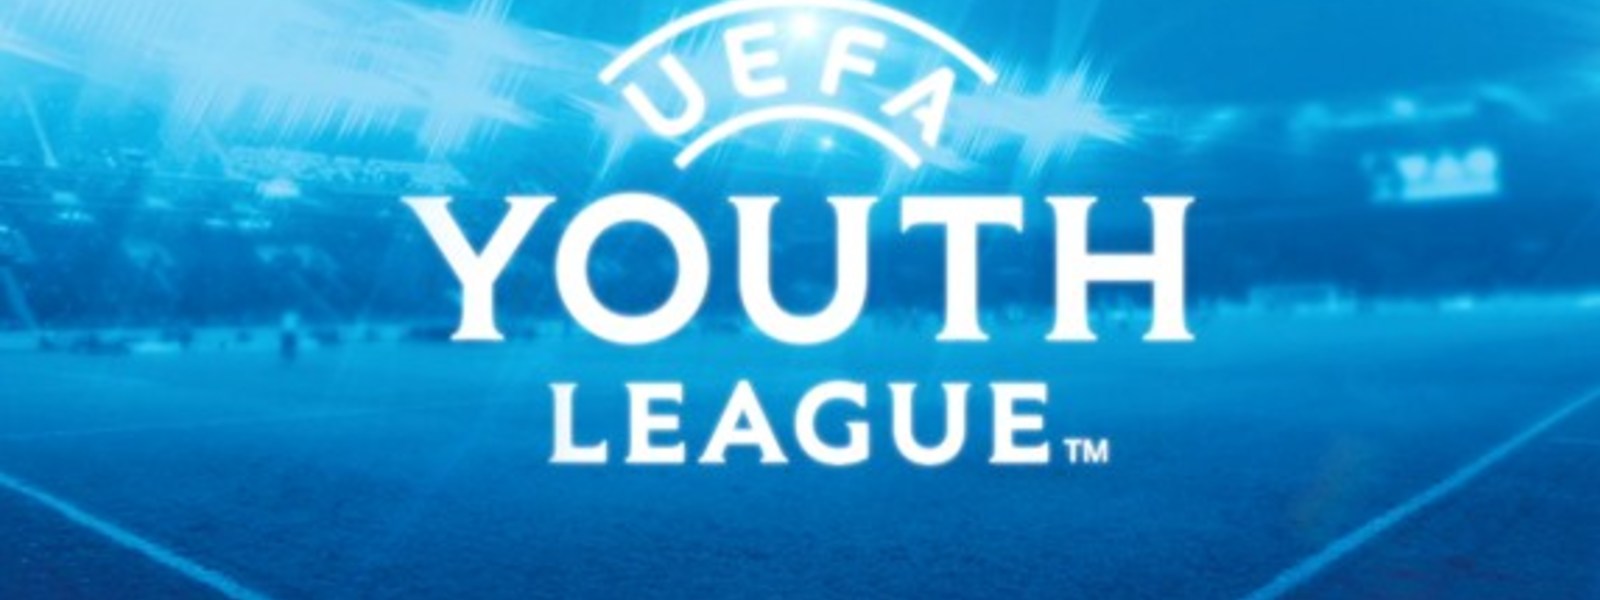 Very big youth league uefa